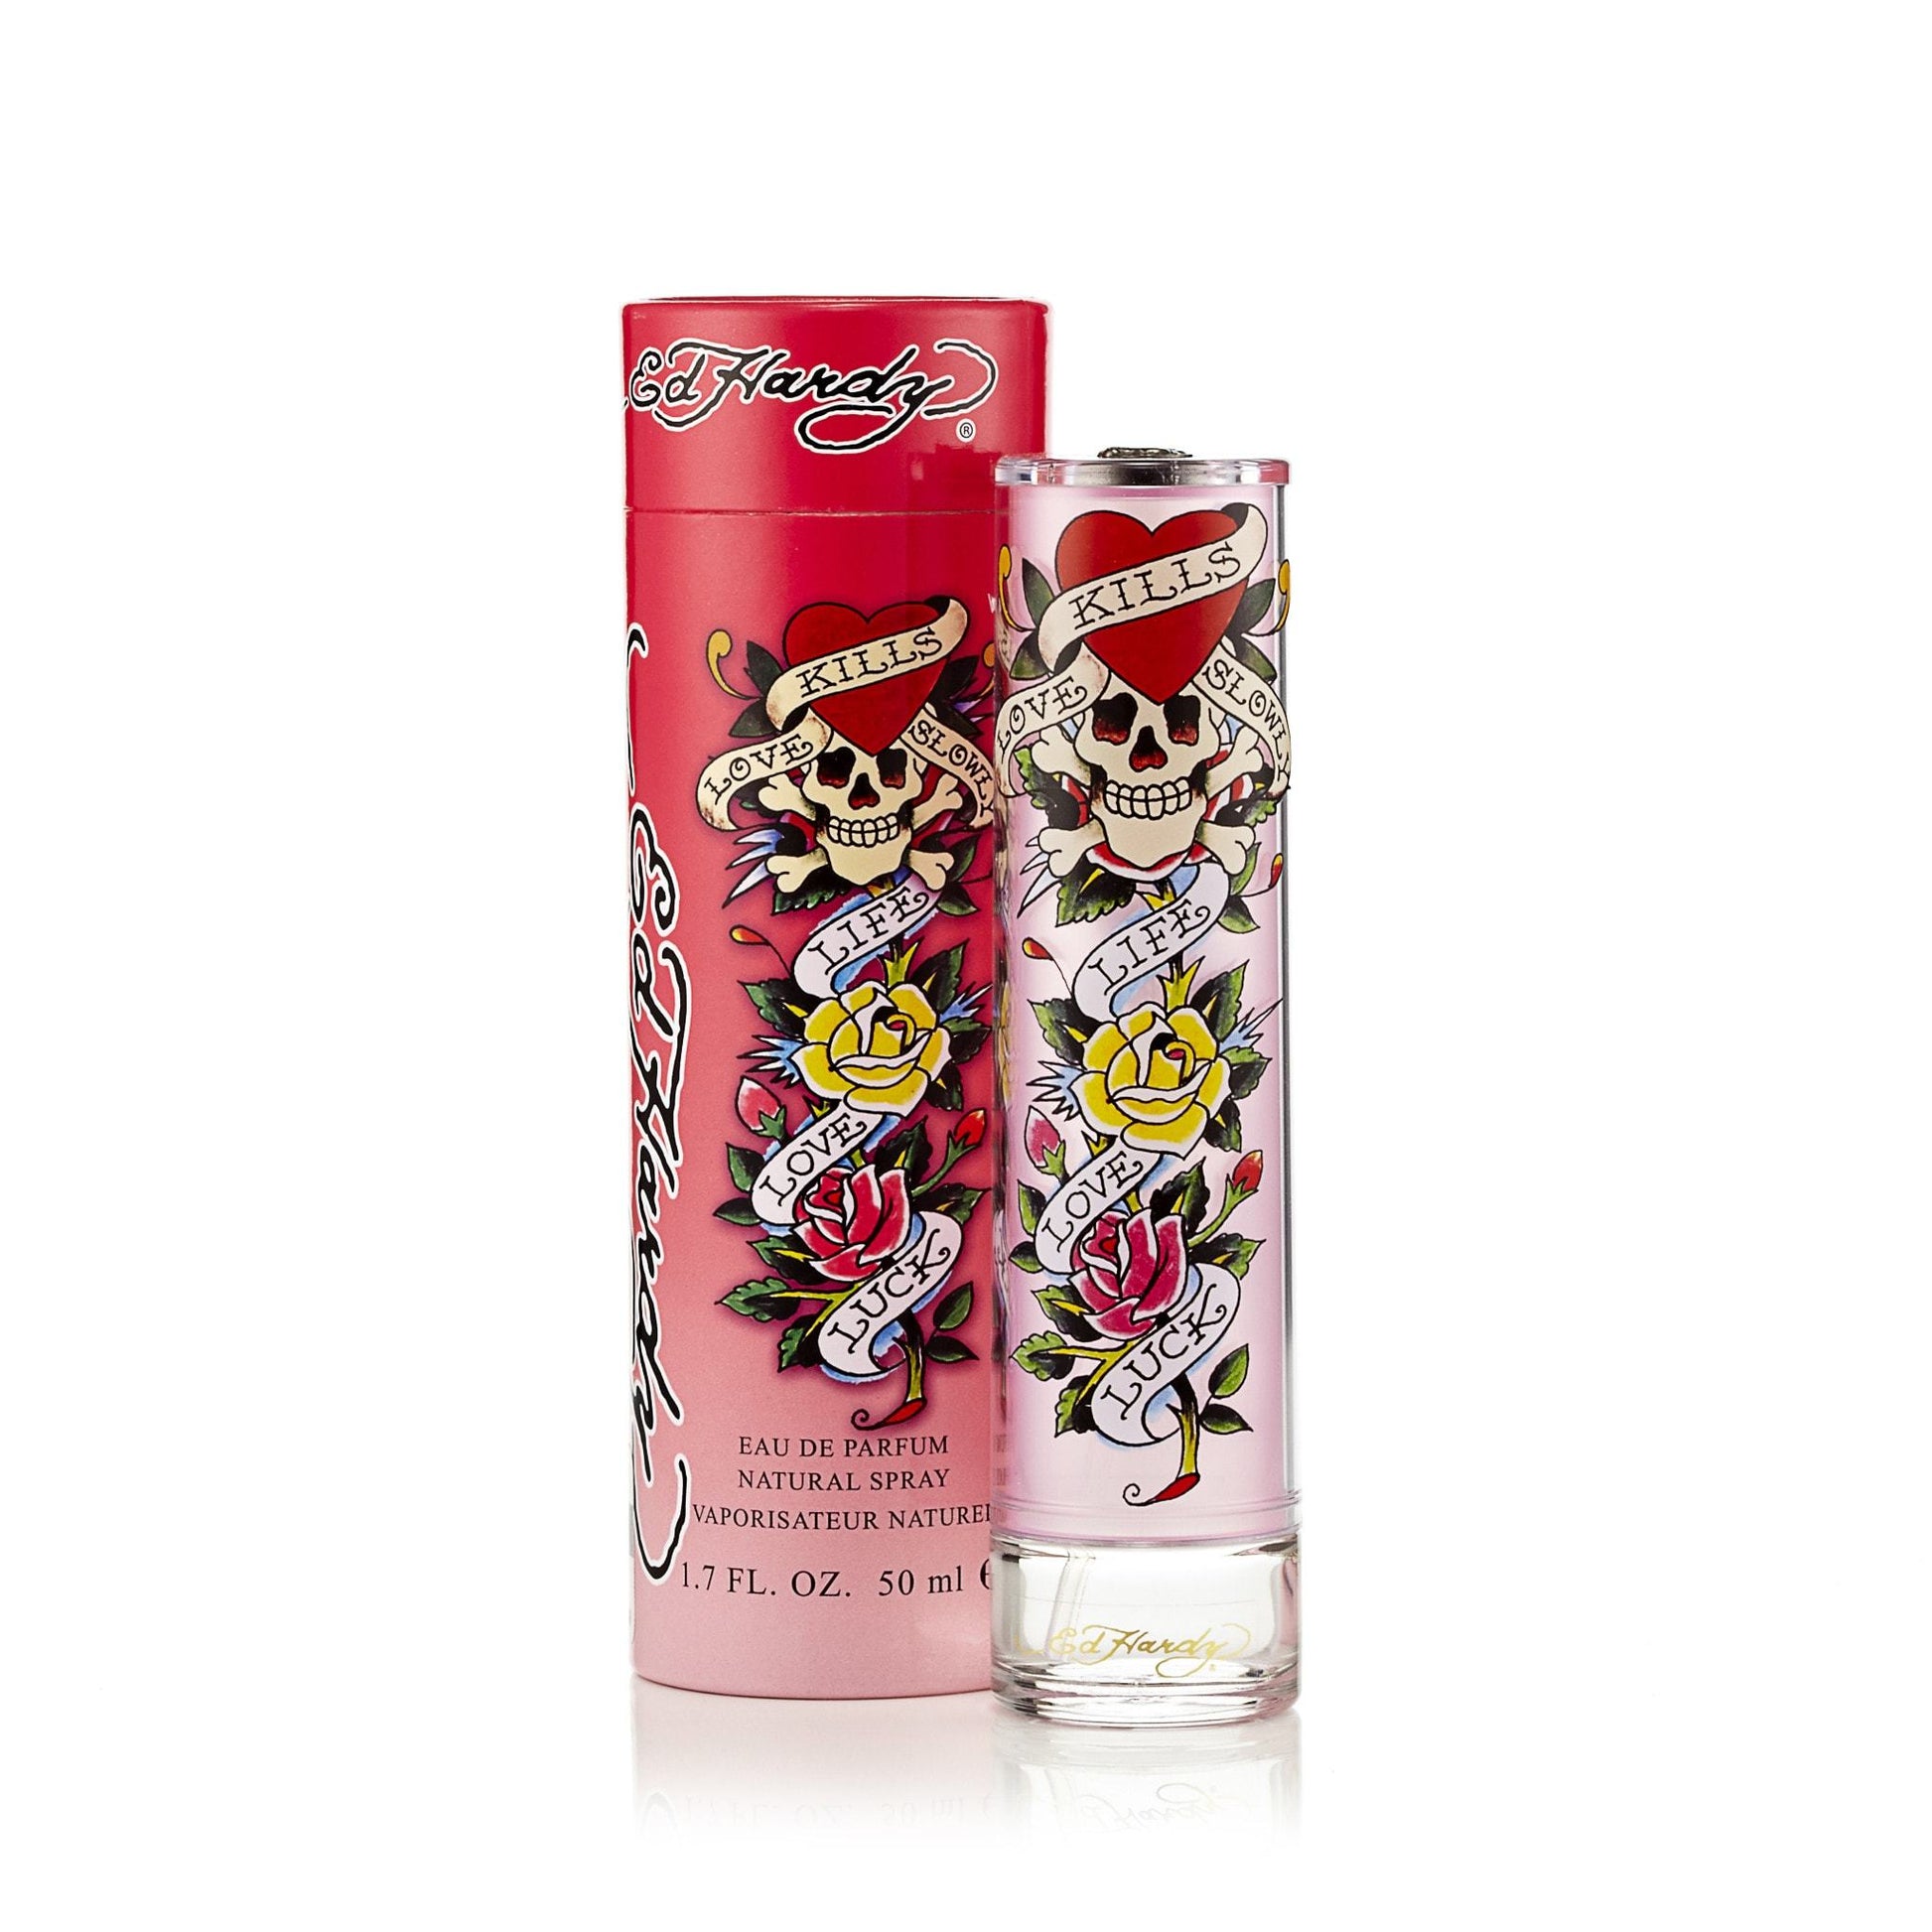 Ed Hardy Eau de Parfum Spray for Women by Christian Audigier, Product image 5